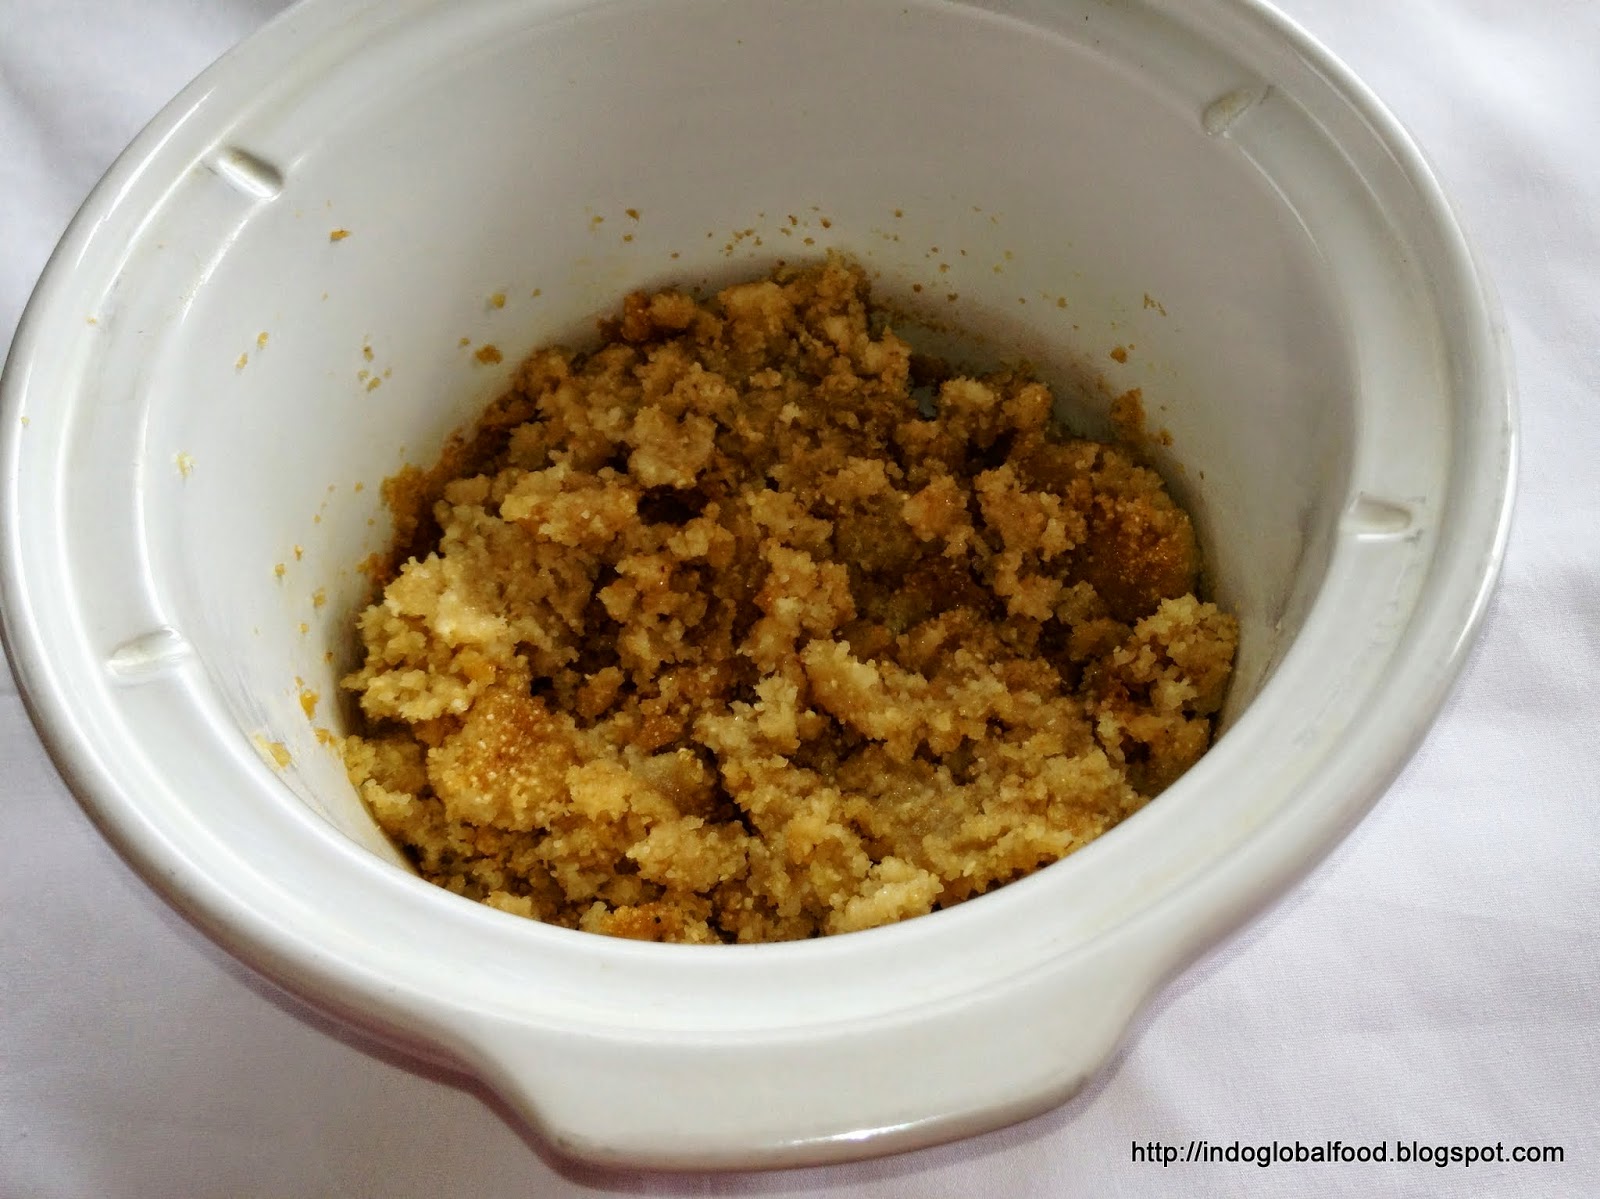 Kansar Recipe Using Slow Cooker: How to Make Kansar in Crockpot